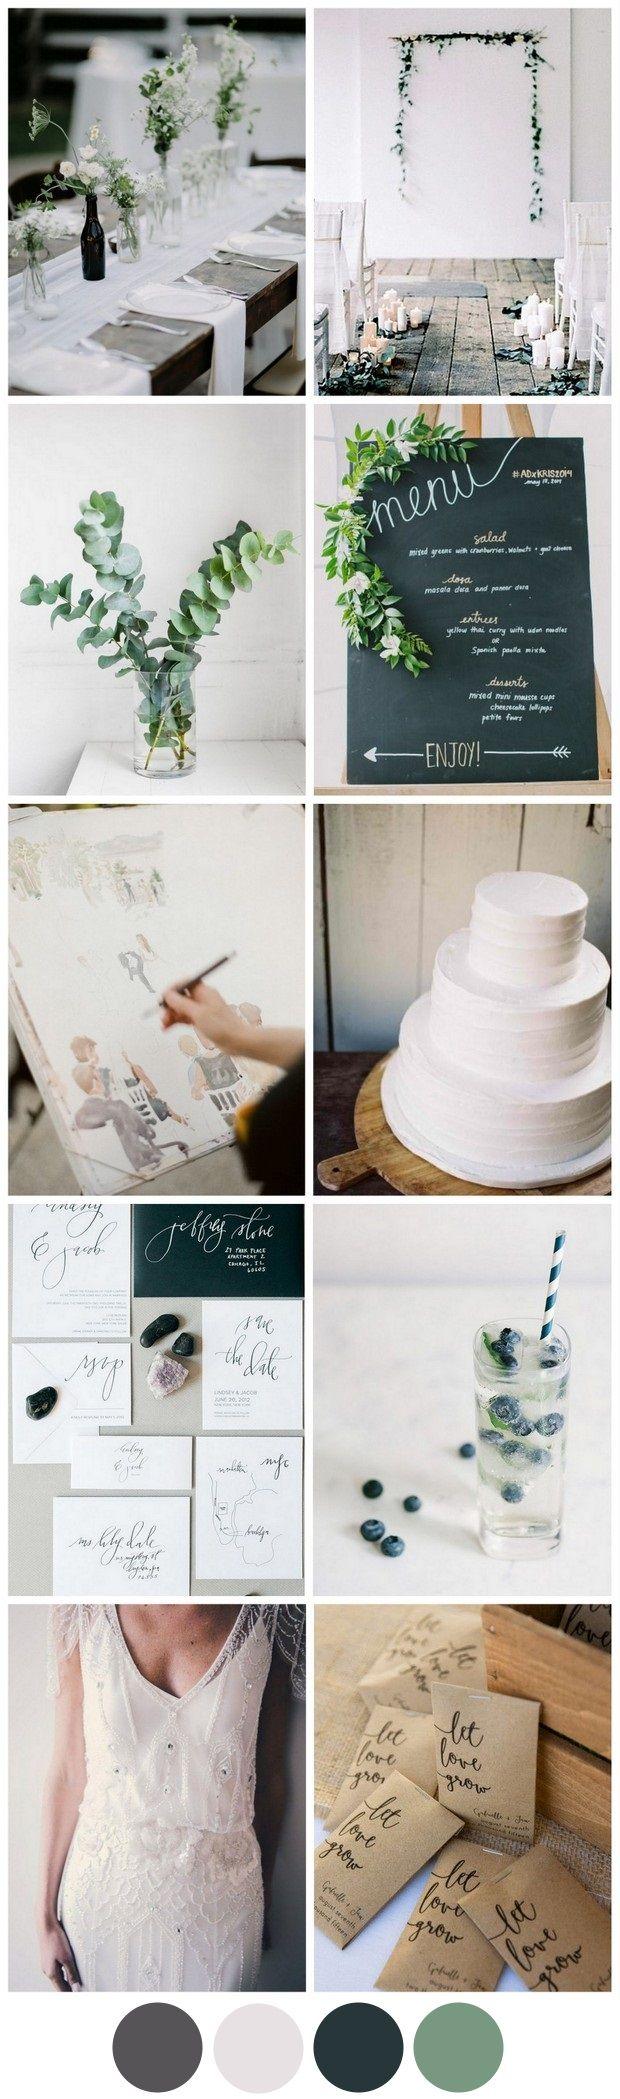 Wedding - A Modern, Minimal Wedding Palette